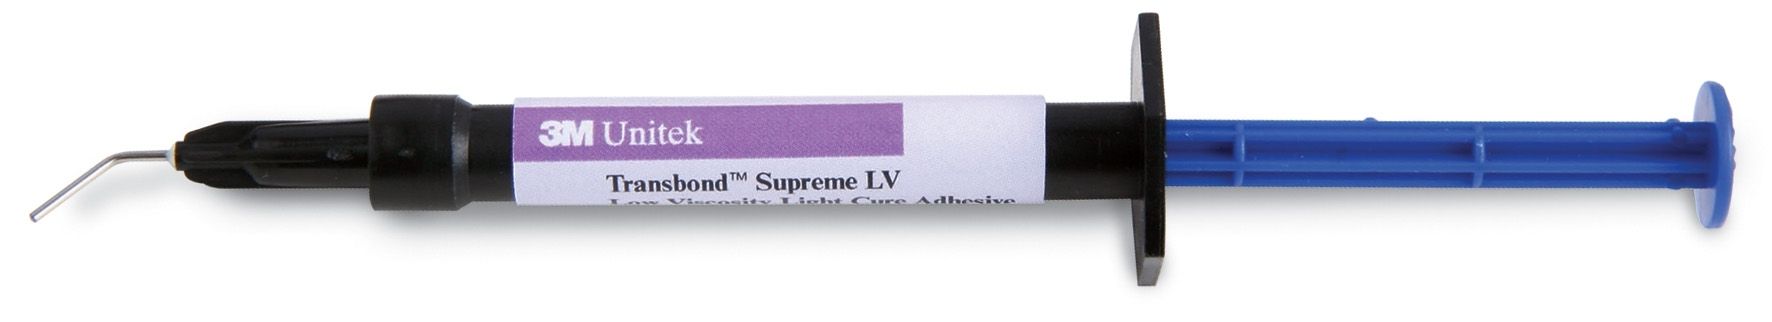 3m Unitek Transbond Supreme Lv Adhesive Kit